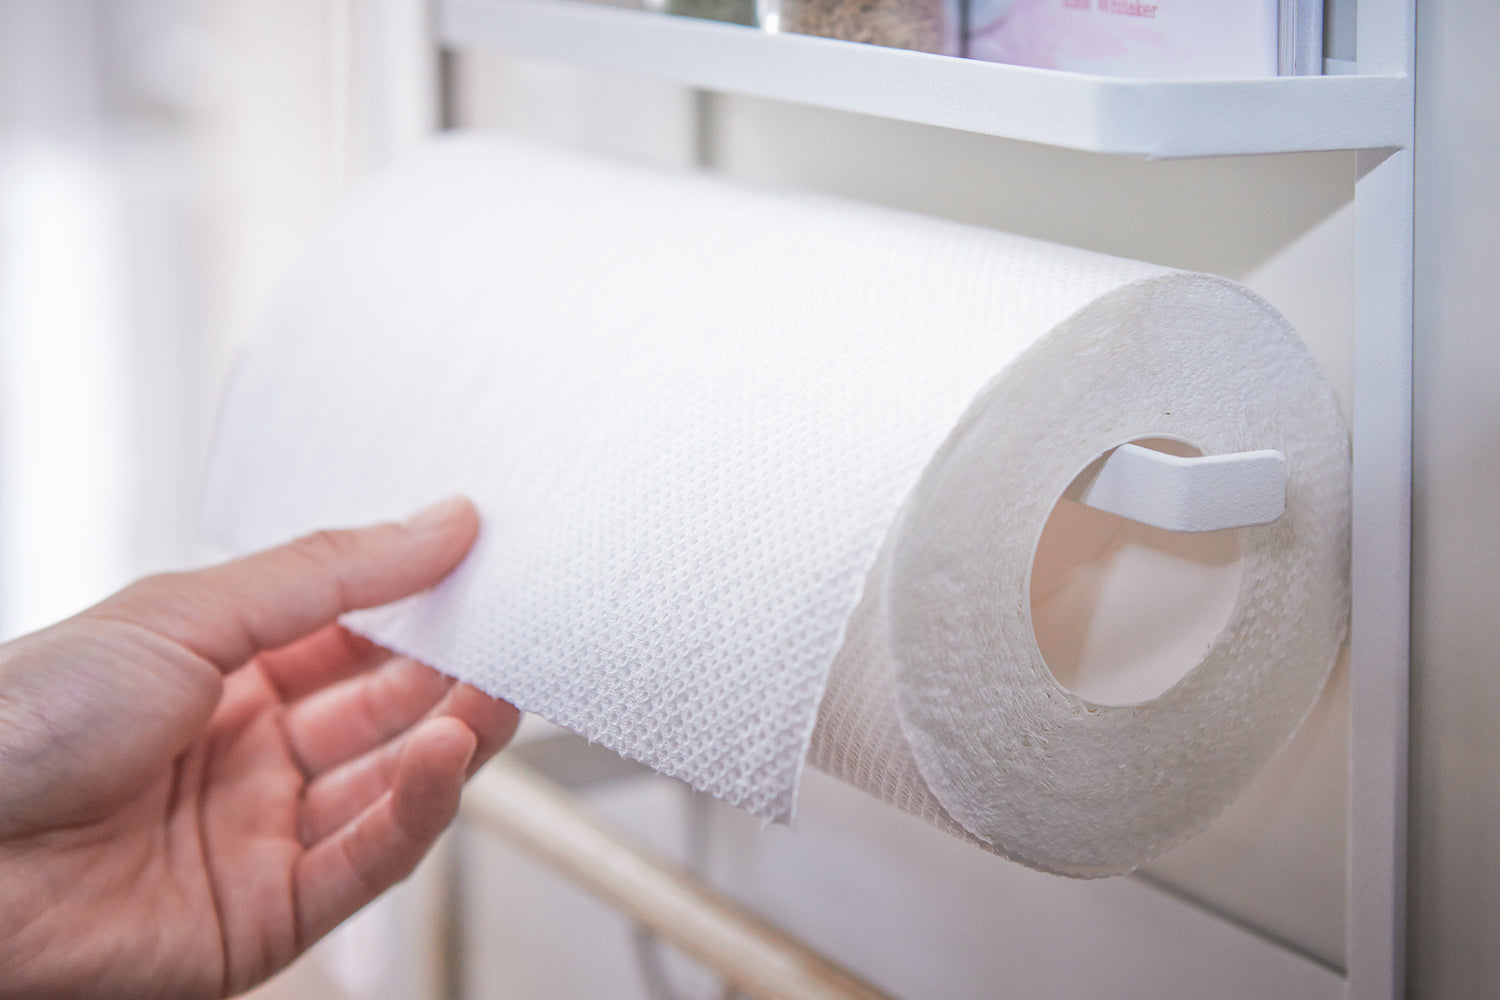 Magnetic Paper Towel Holder Multifunction Towel Bar Roll Paper